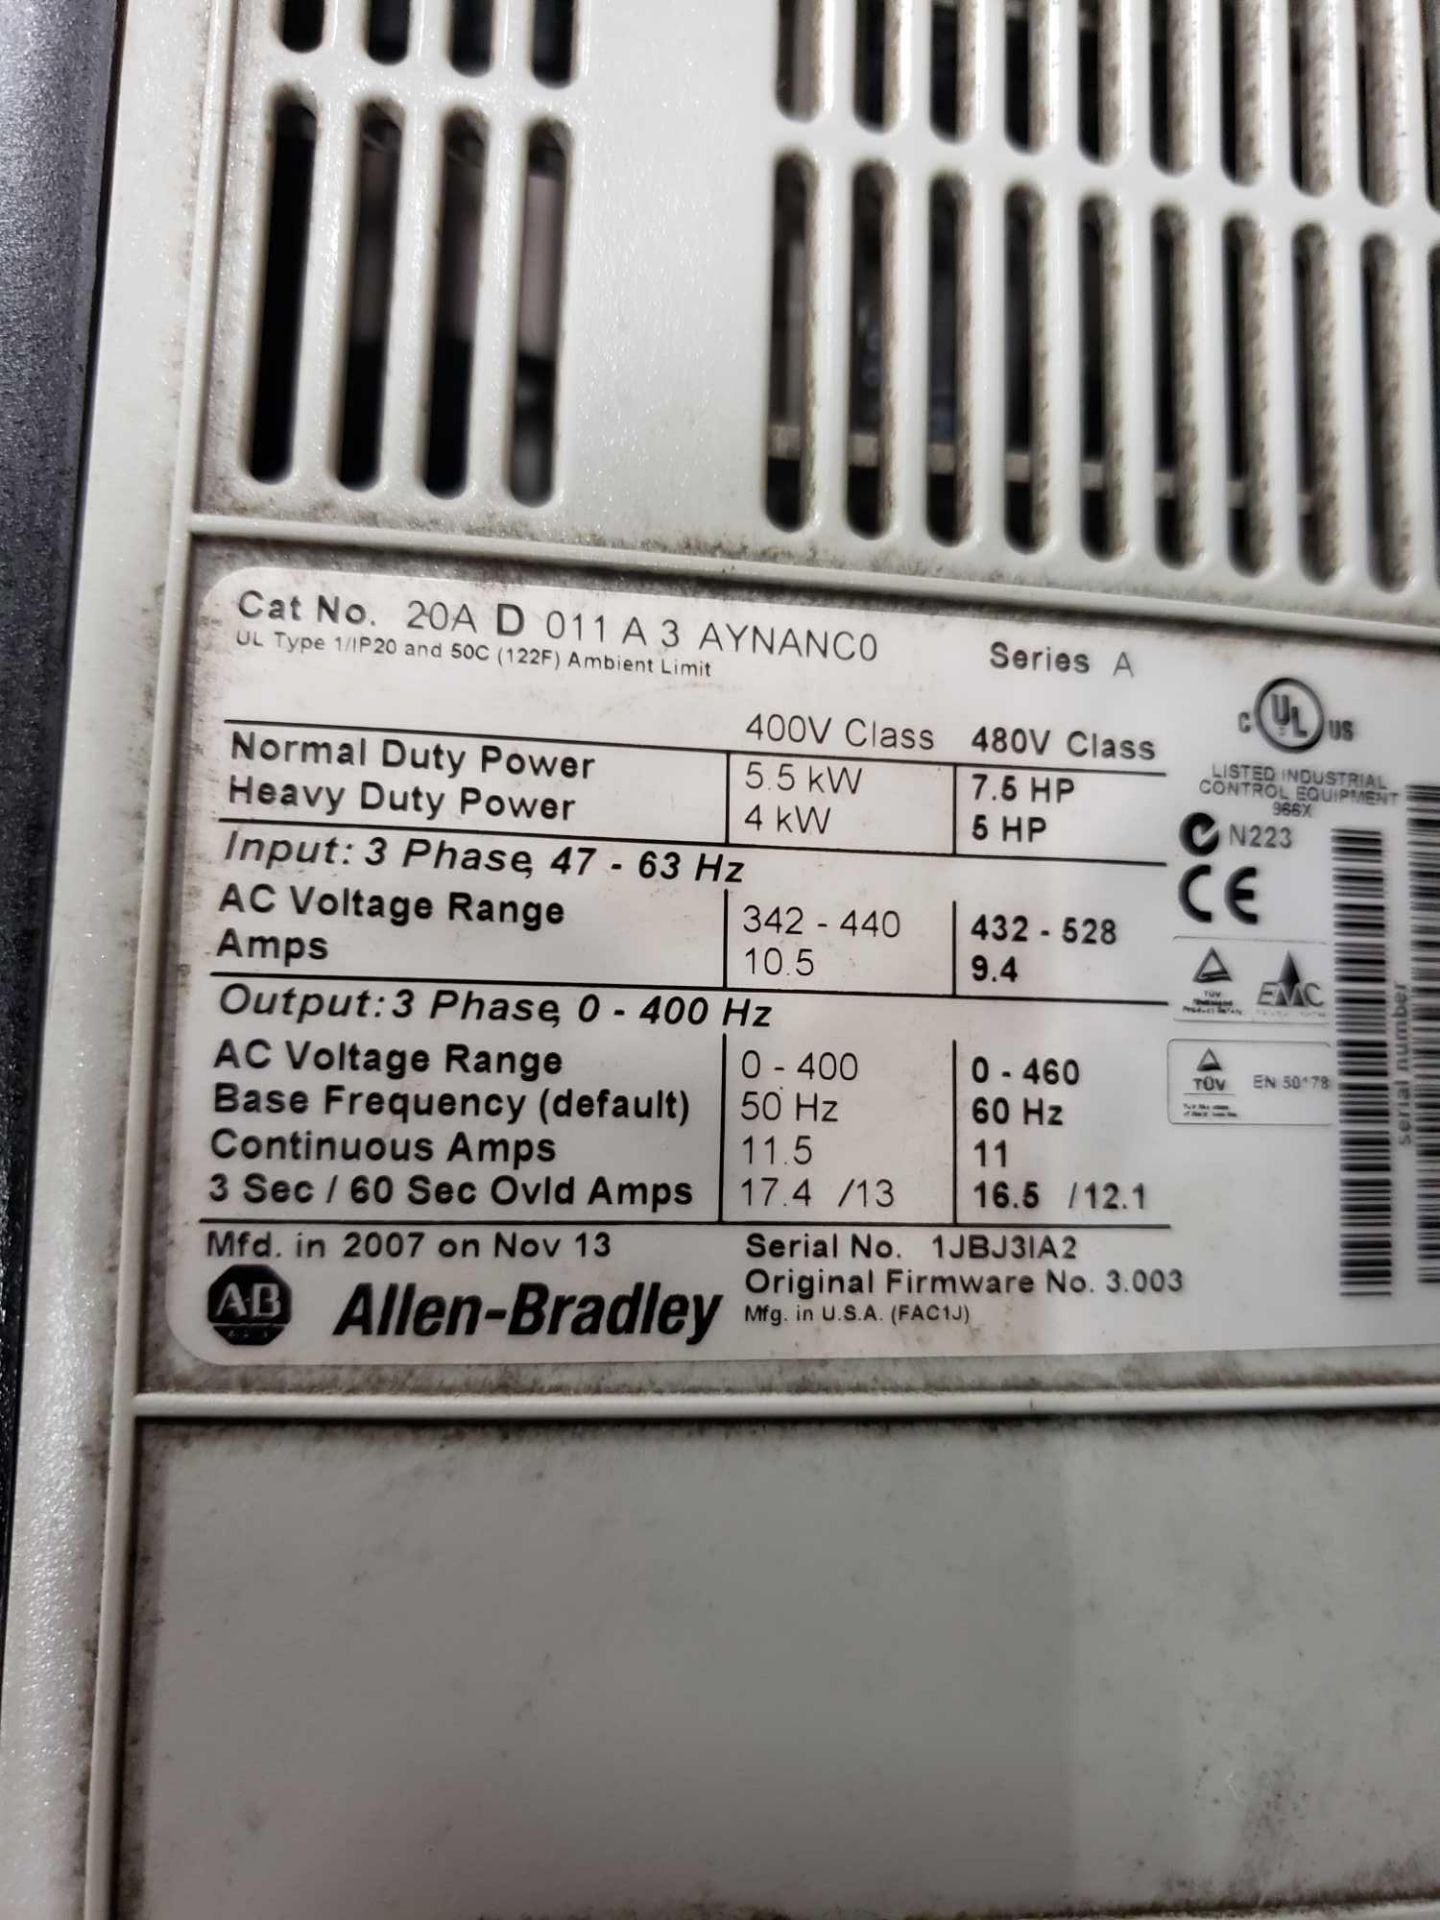 Allen Bradley Powerflex 70 drive. Catalog number 20A-D-011-A-3-AYNANC0. - Image 2 of 2